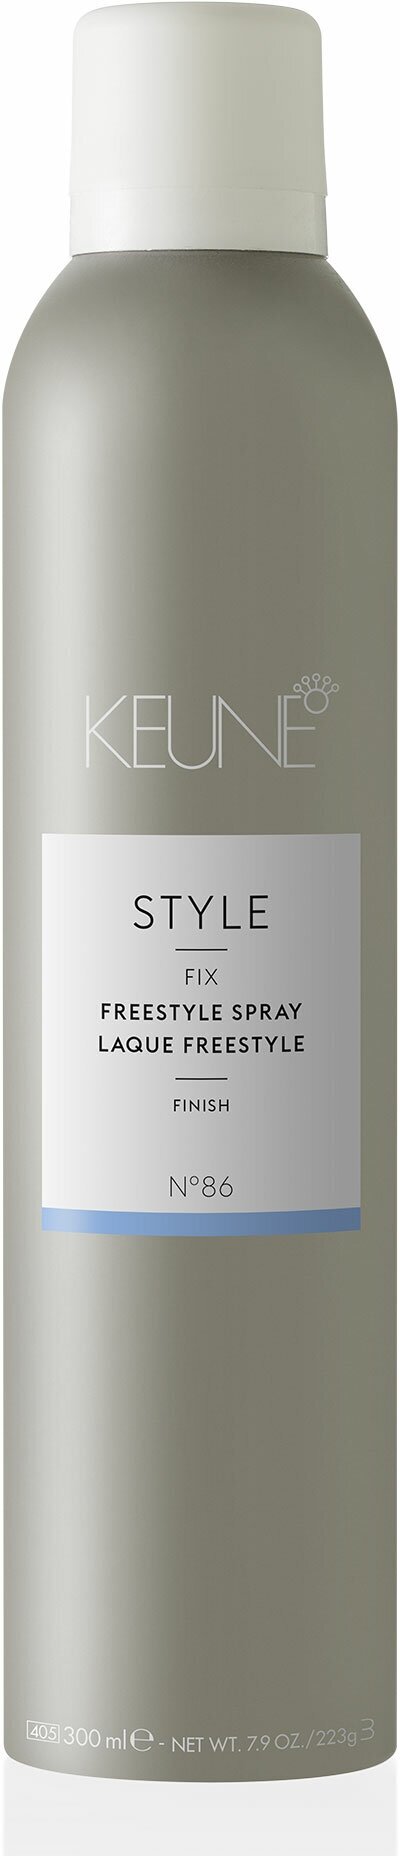 Keune Лак для волос Фристайл 300 мл - Celebrate Style Freestyle Spray